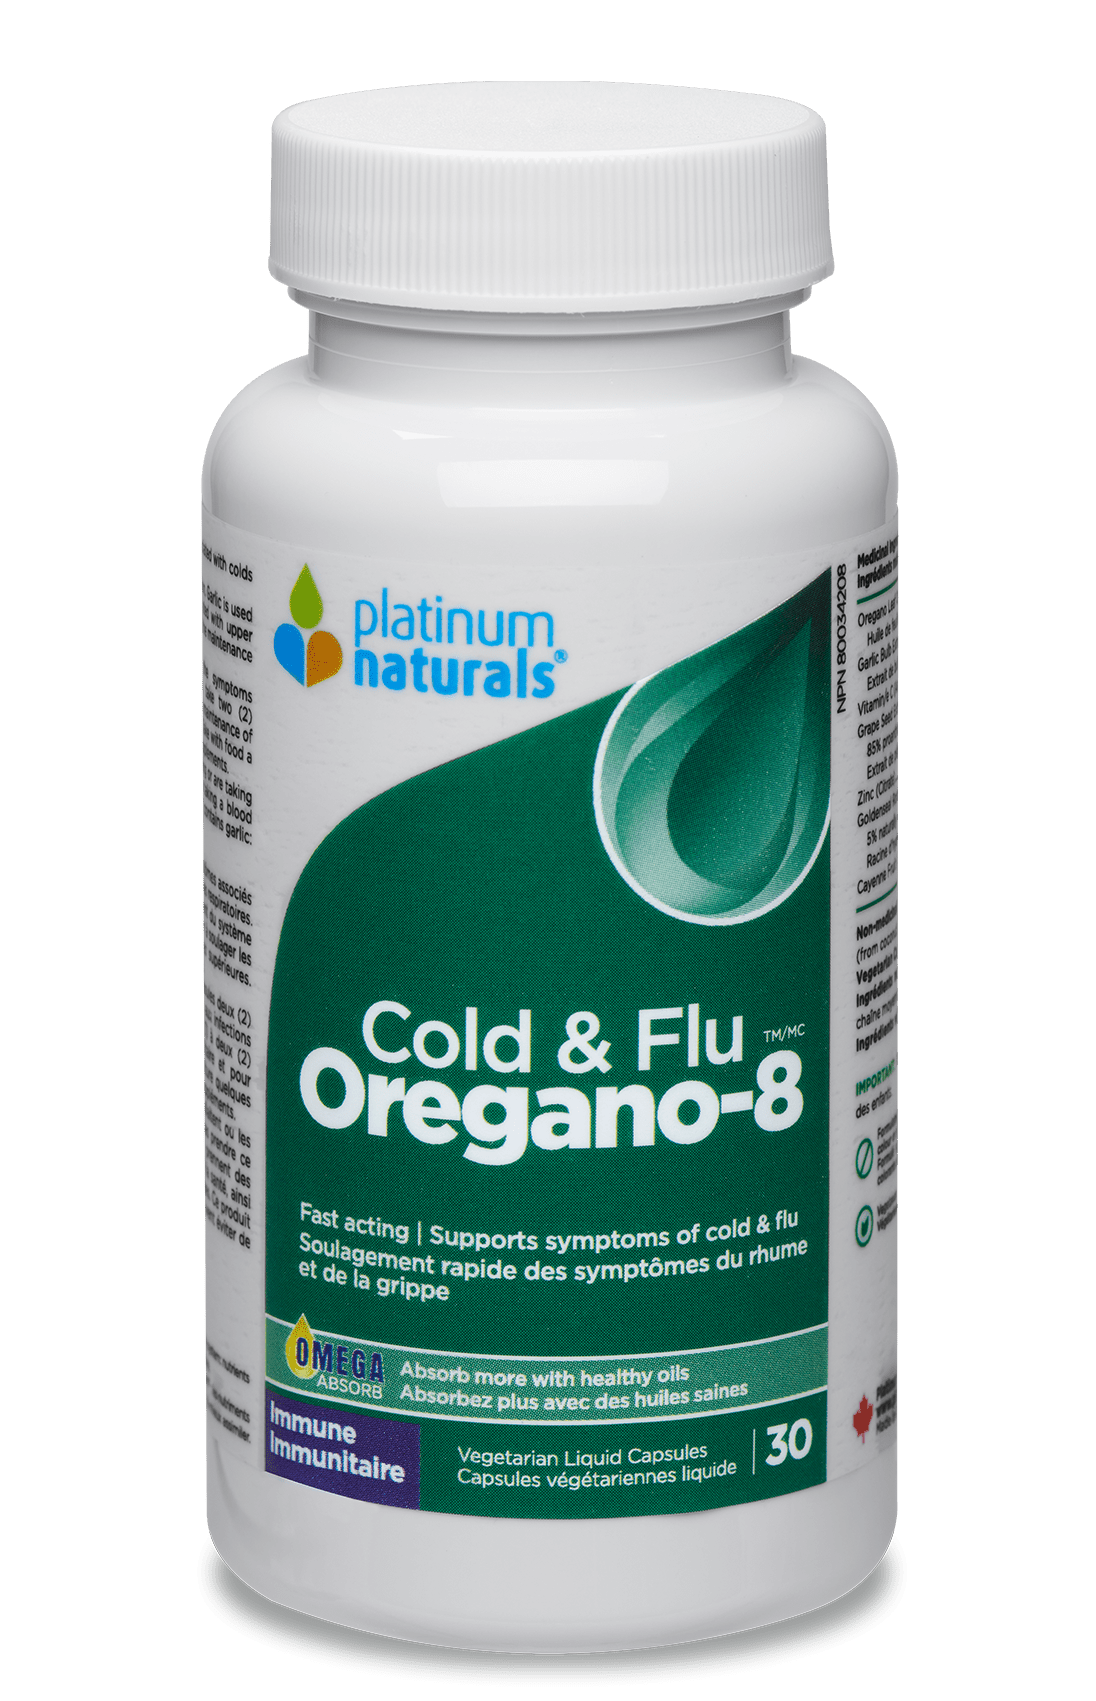 Oregano-8 Cold and Flu Therapeutic cg-dev-platinumnaturals 30 